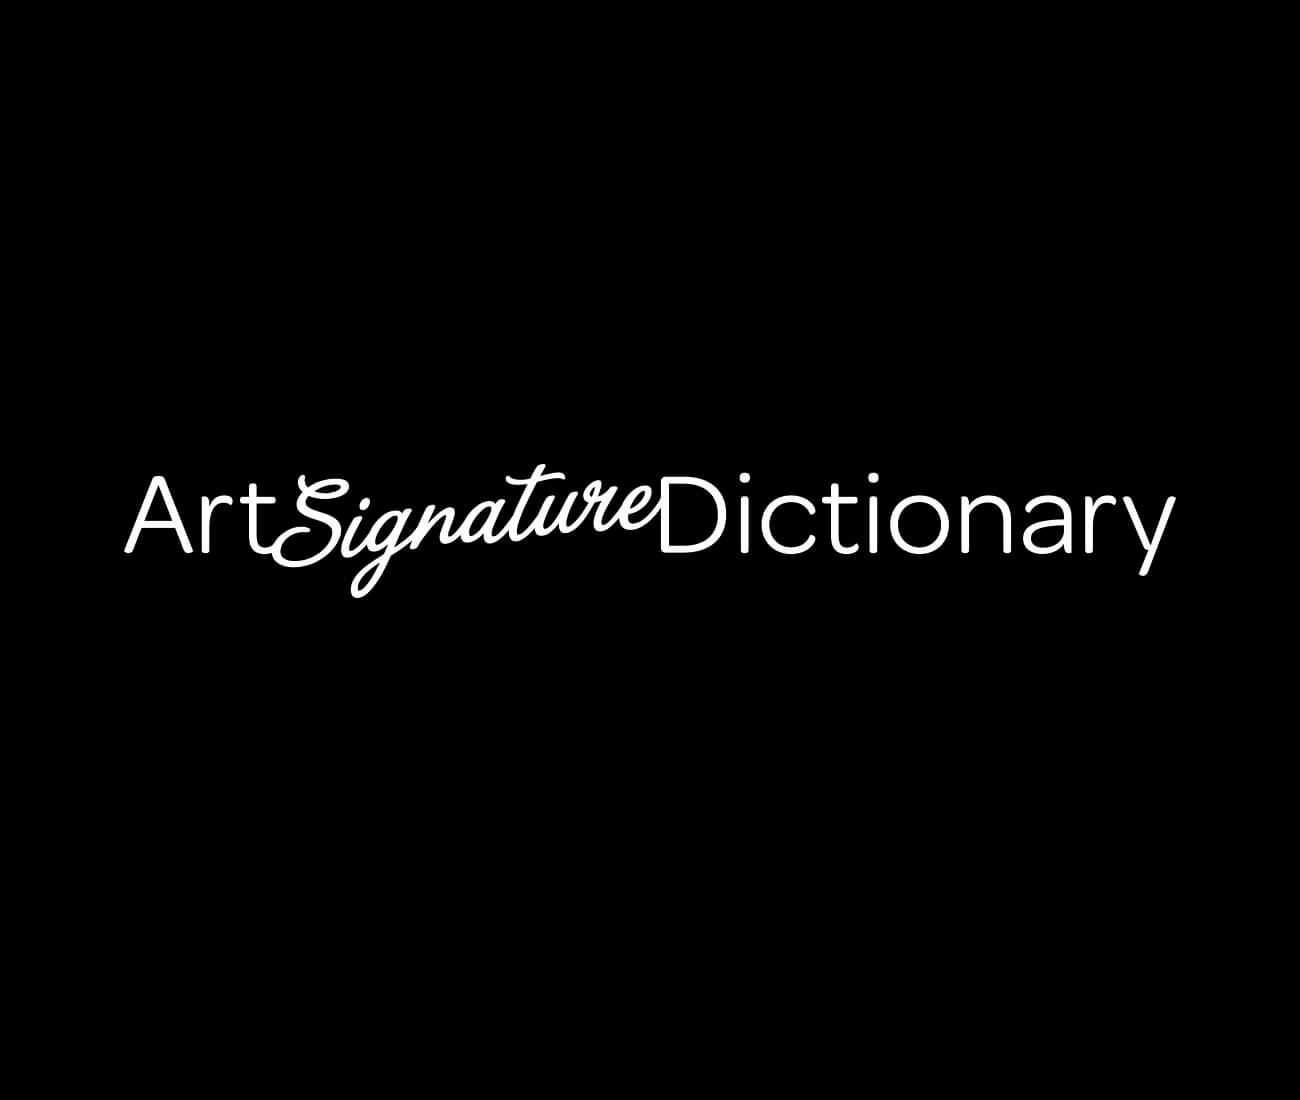 Art Signature Dictionary